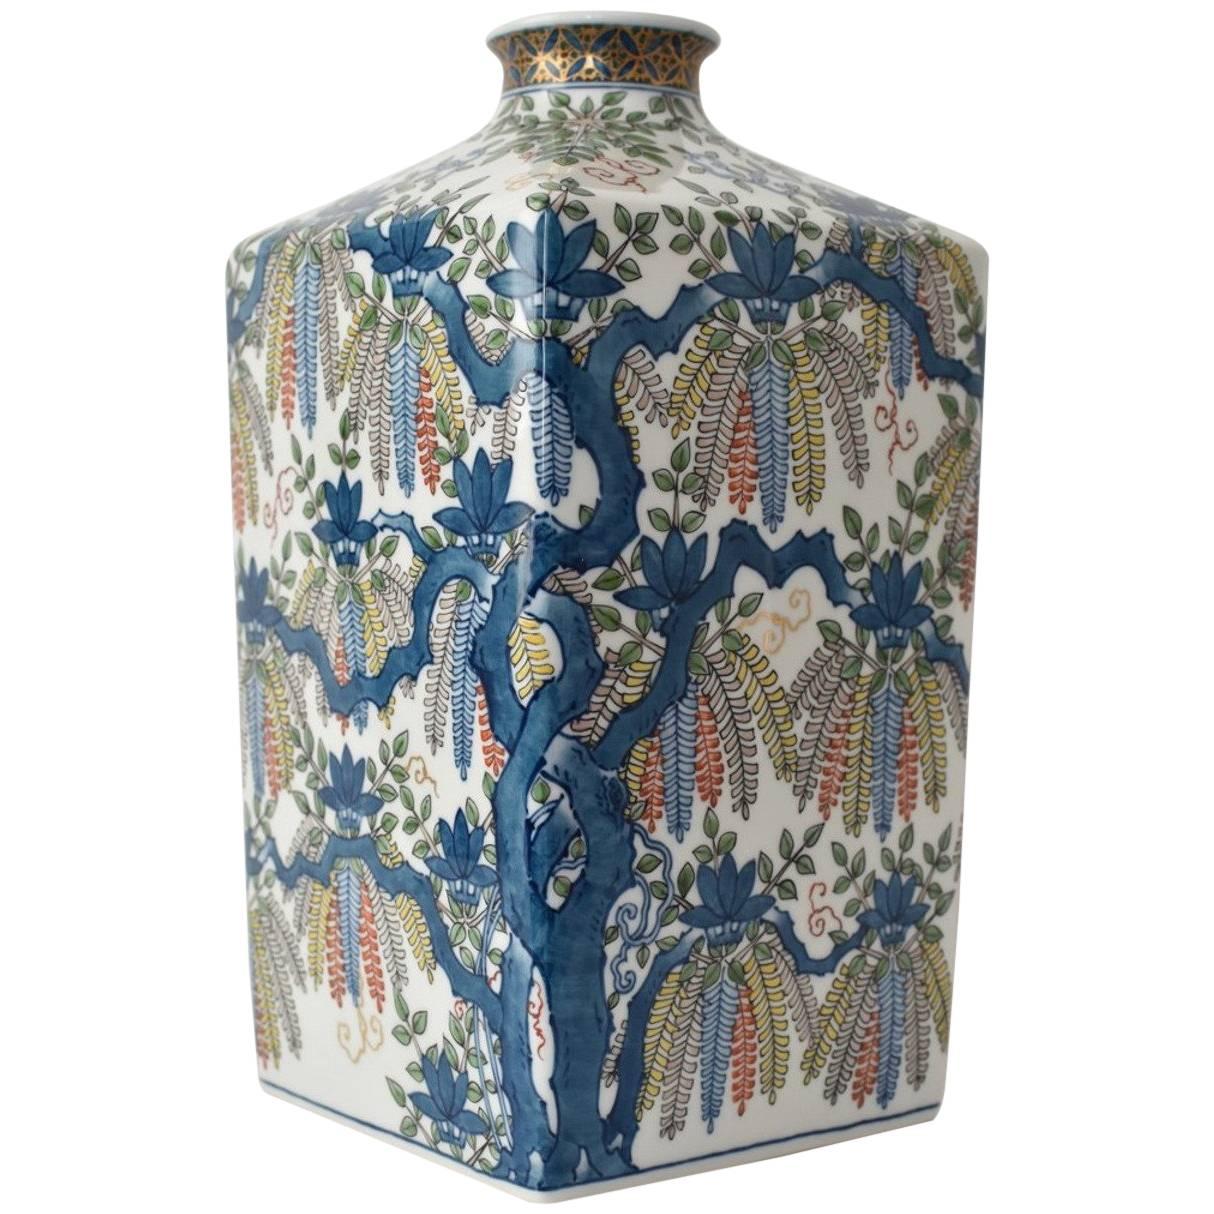 Contemporary Japanese Decorative Porcelain Vase by Master Artist